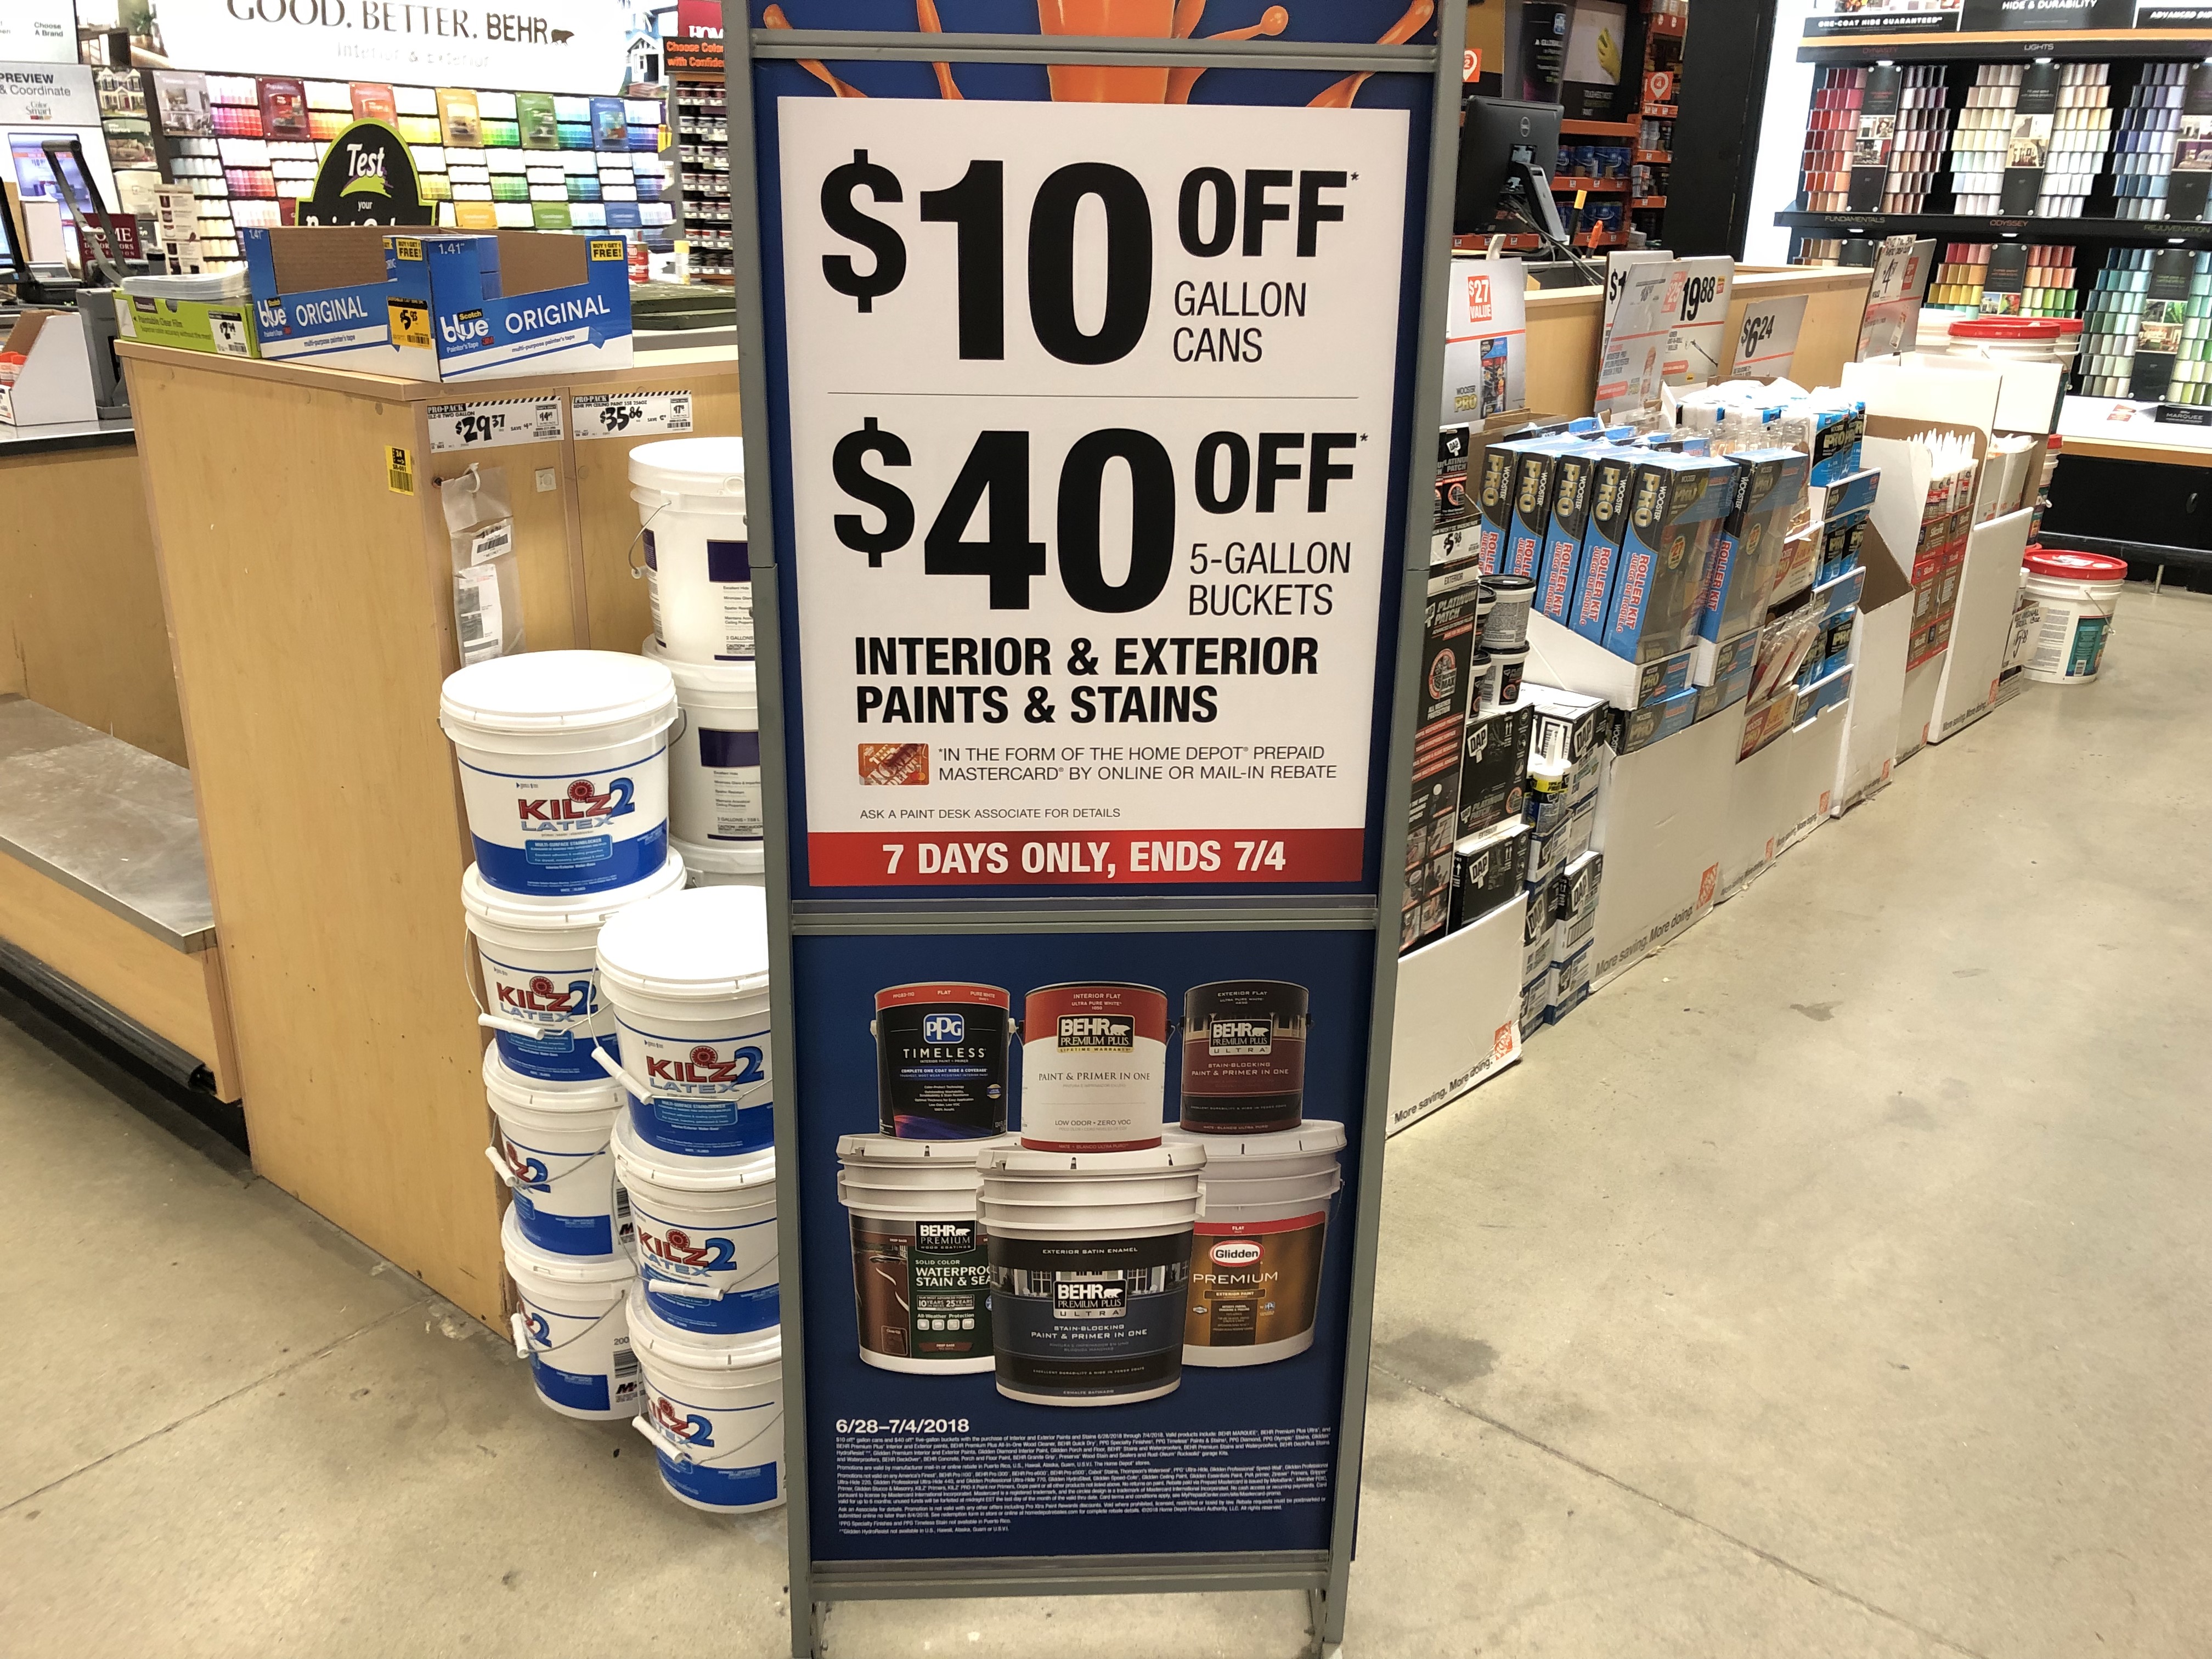 Home Depot paint sign showing deals on paint